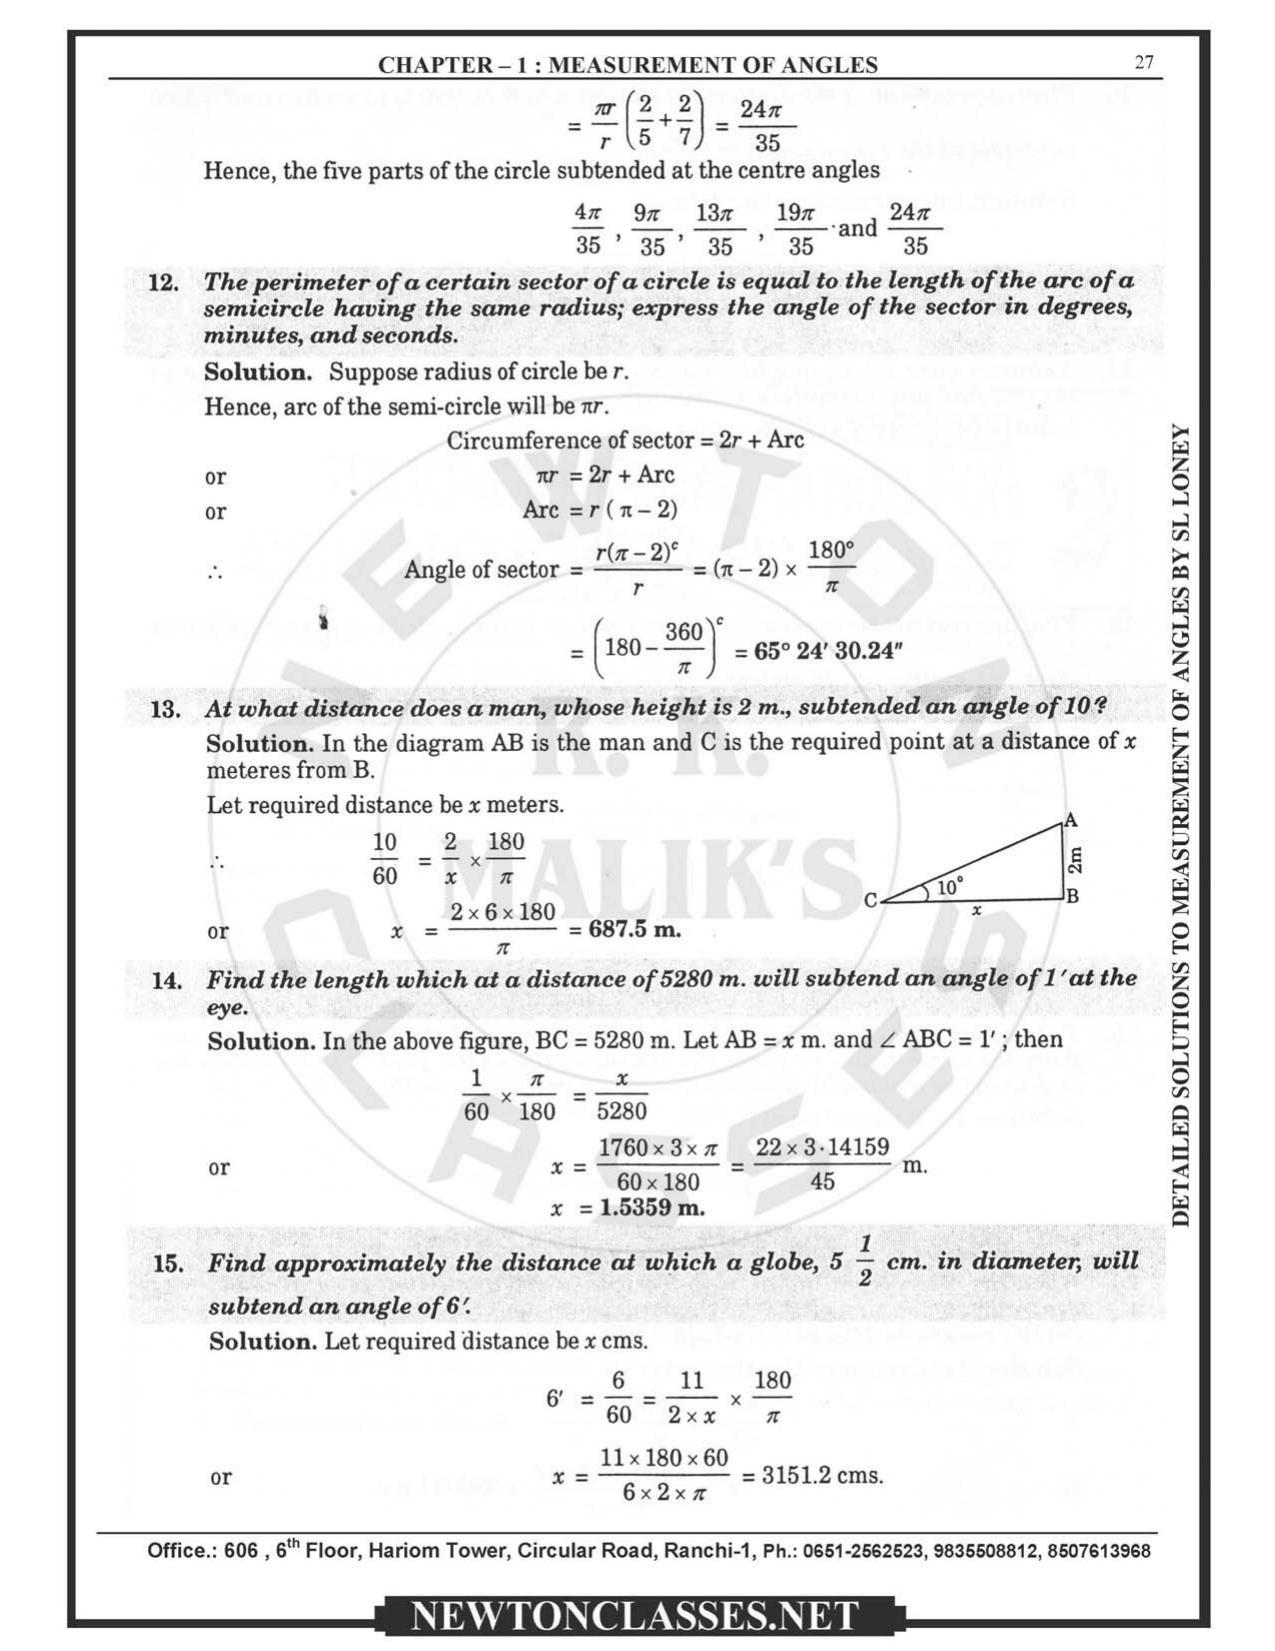 SL Loney Plane Trigonometry Solutions: Measurement of Angles - Page 27